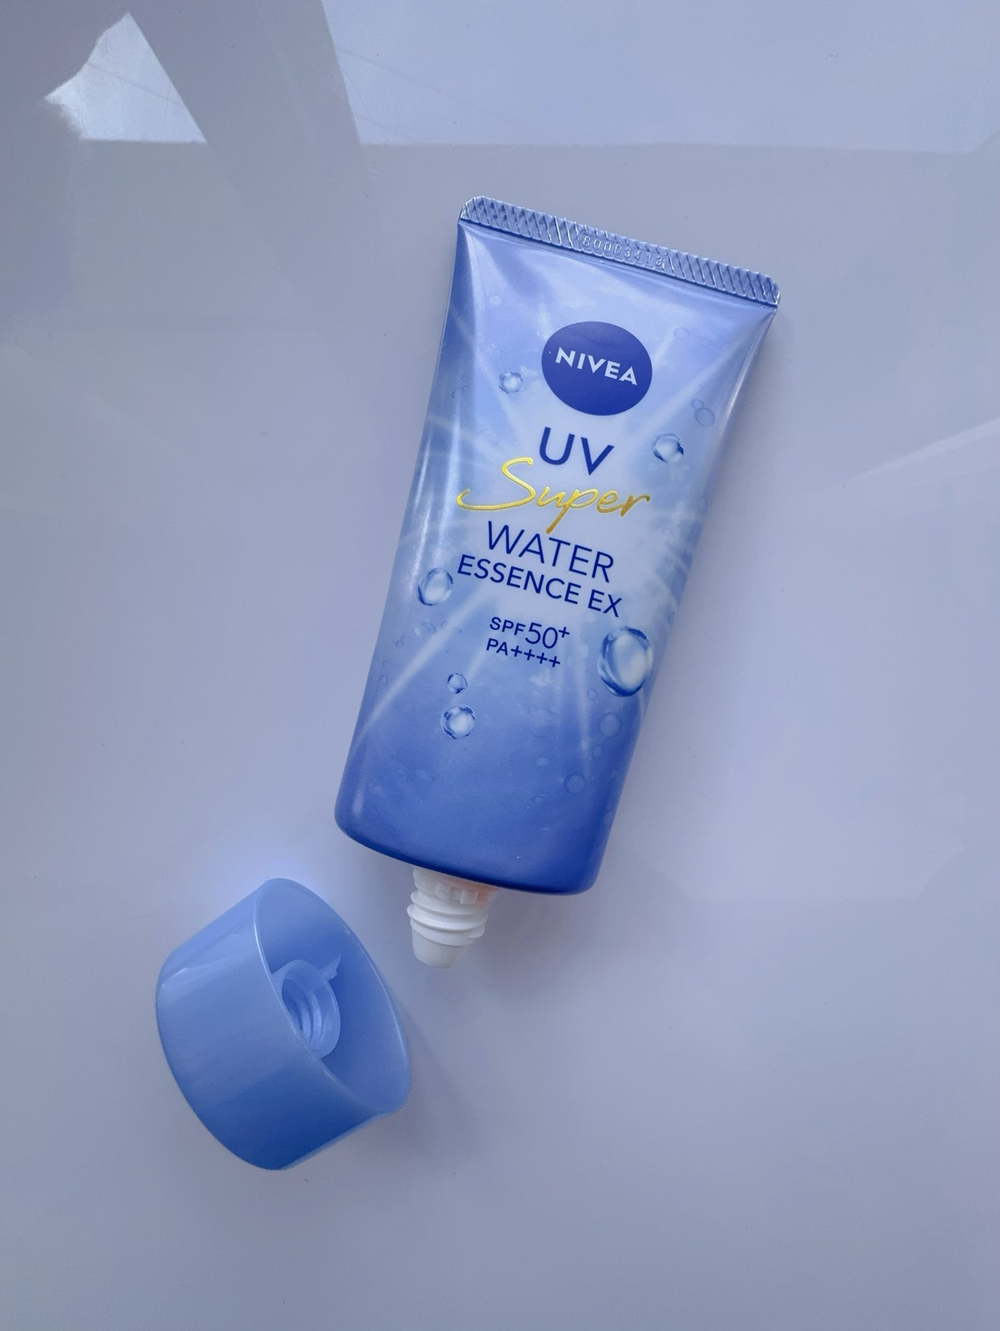 Nivea Japan - UV Super Water Essence EX SPF 50+ PA++++